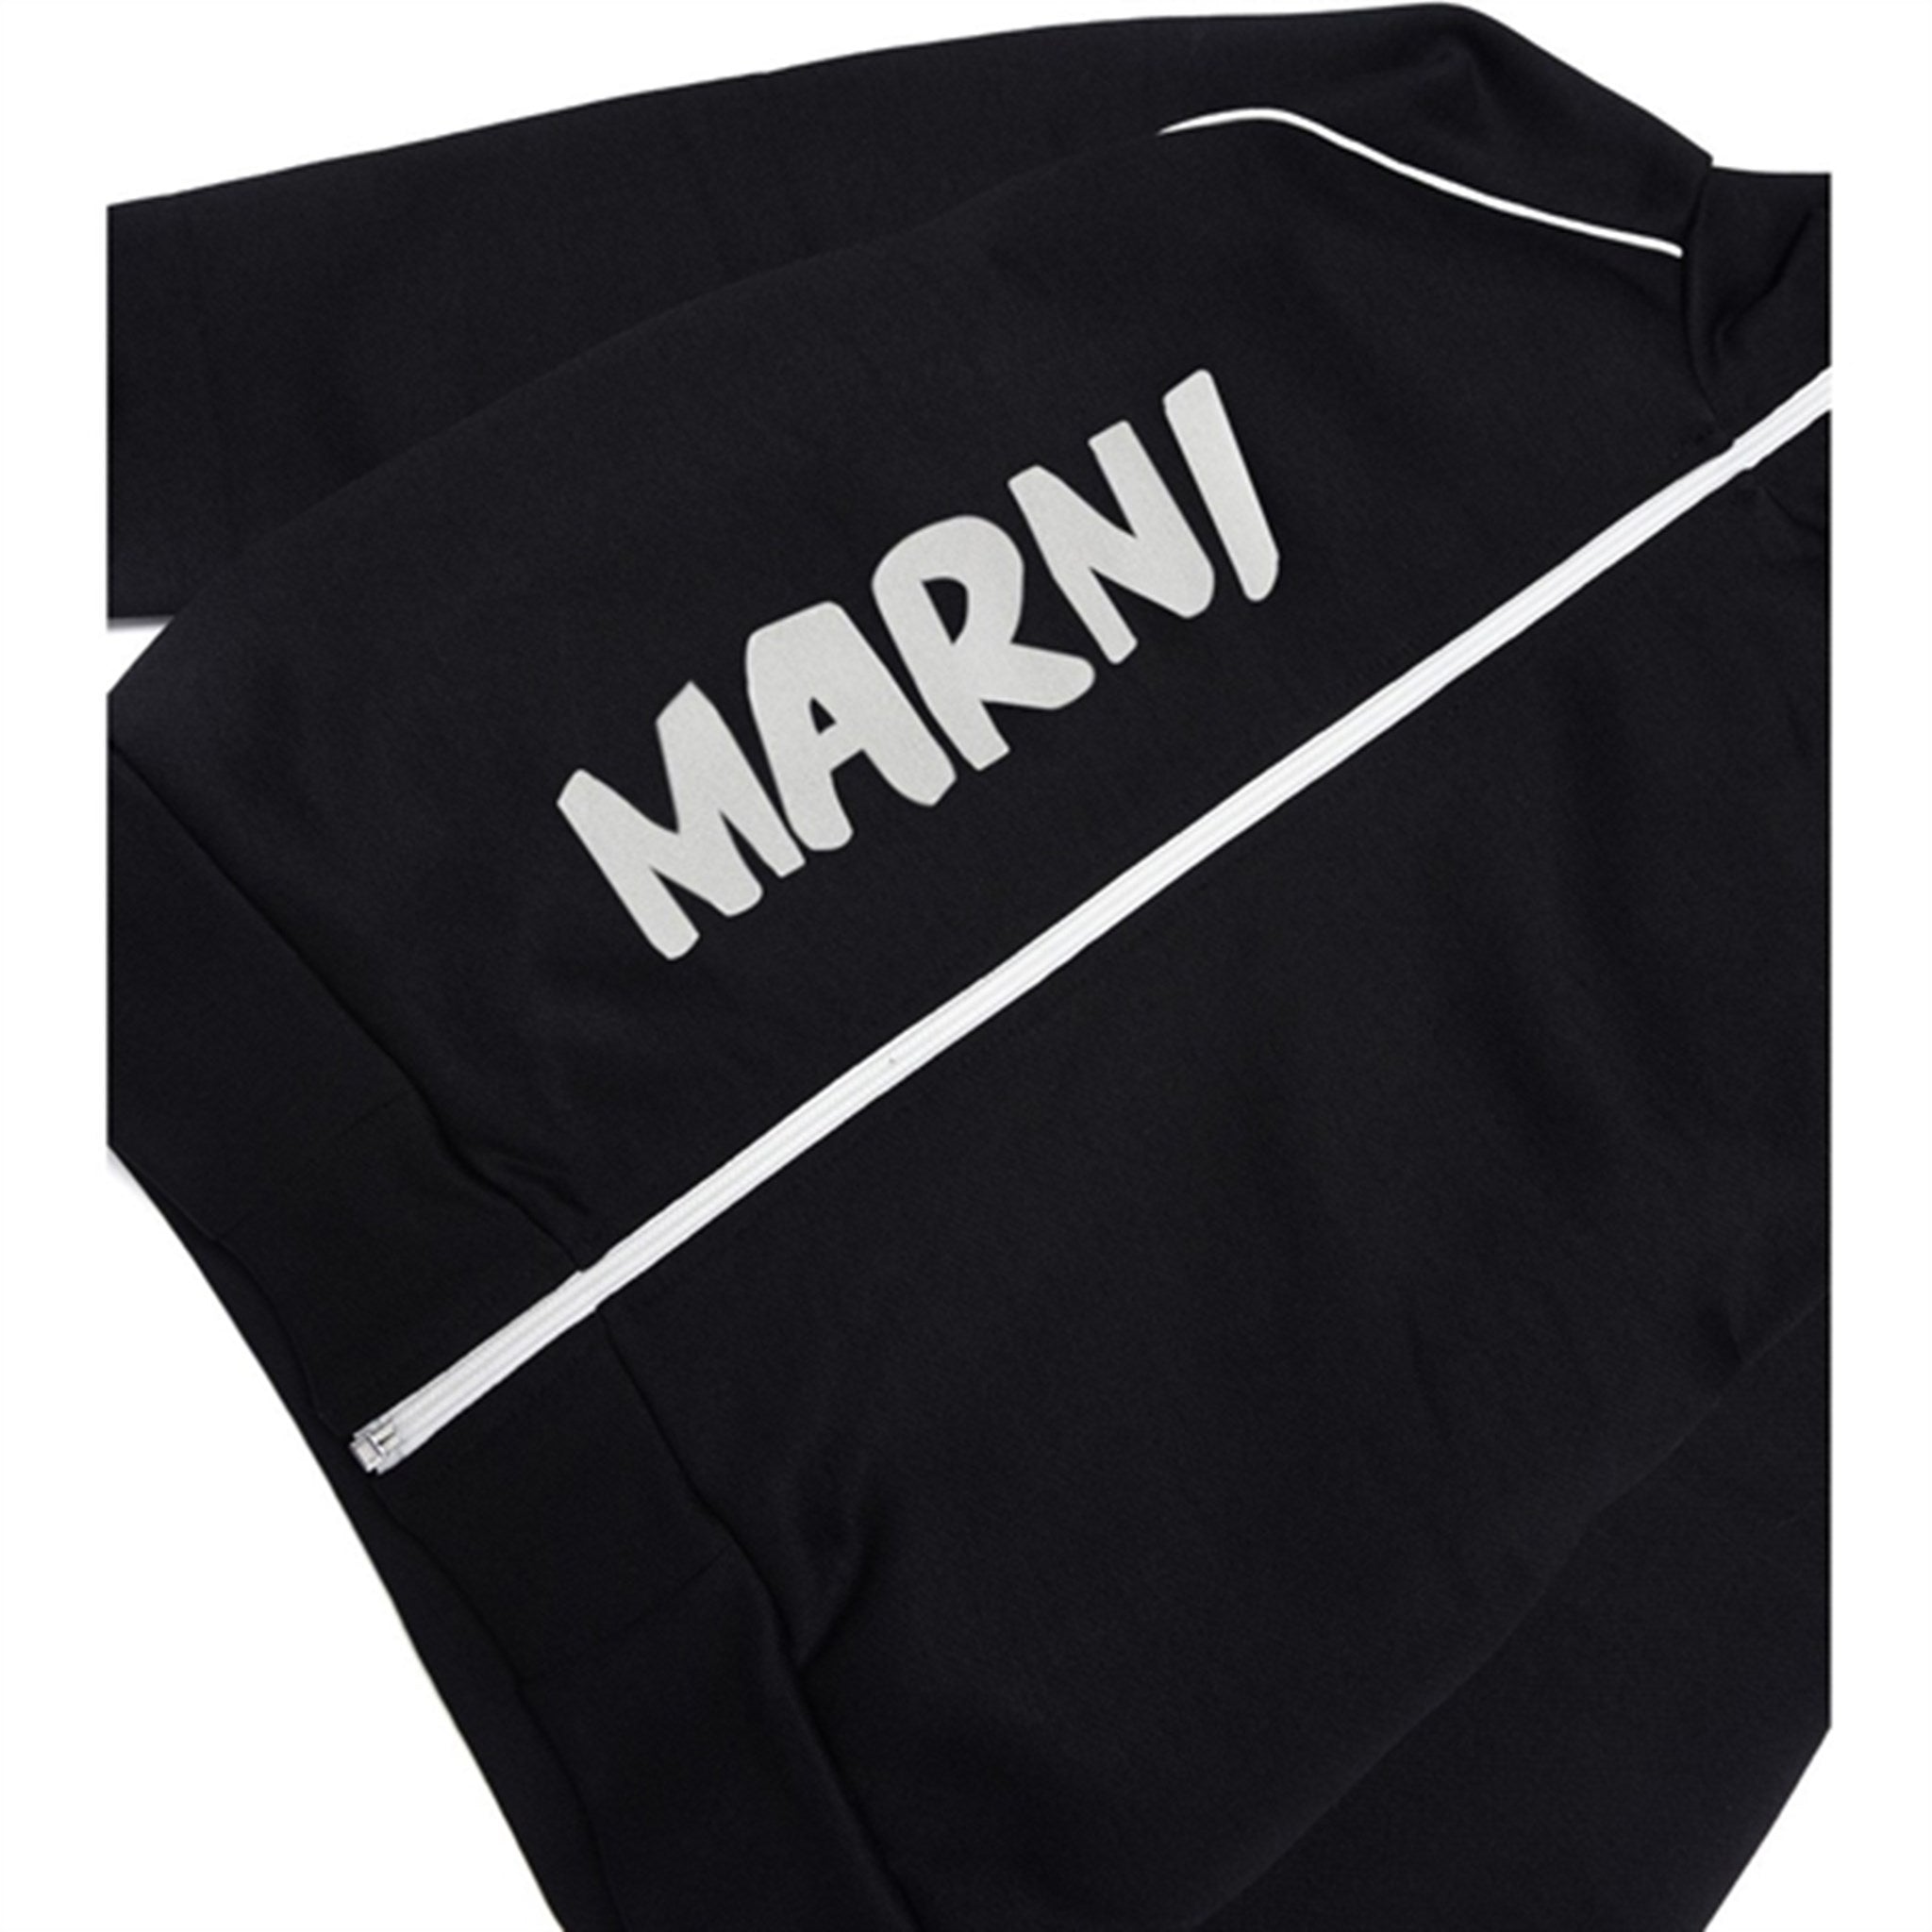 Marni Black Sweatshirt 2